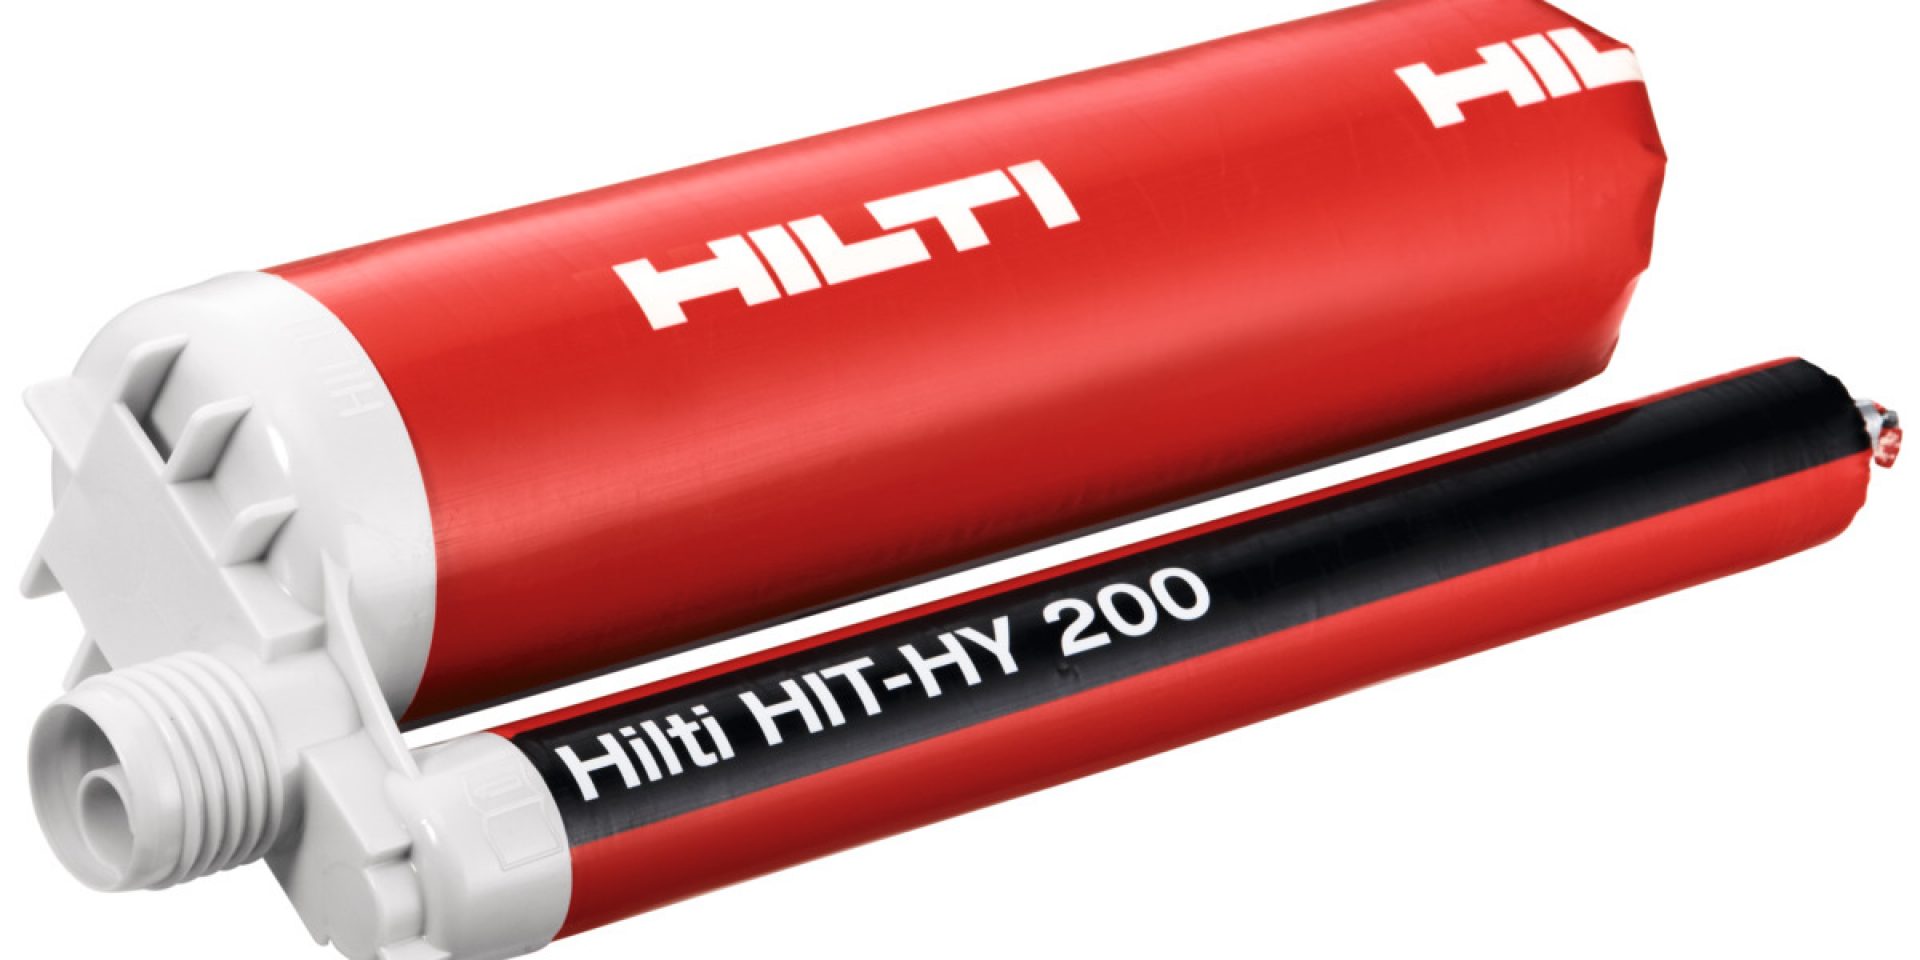 Ultimate-performance hybrid mortar HILTI HIT-HY 200-A